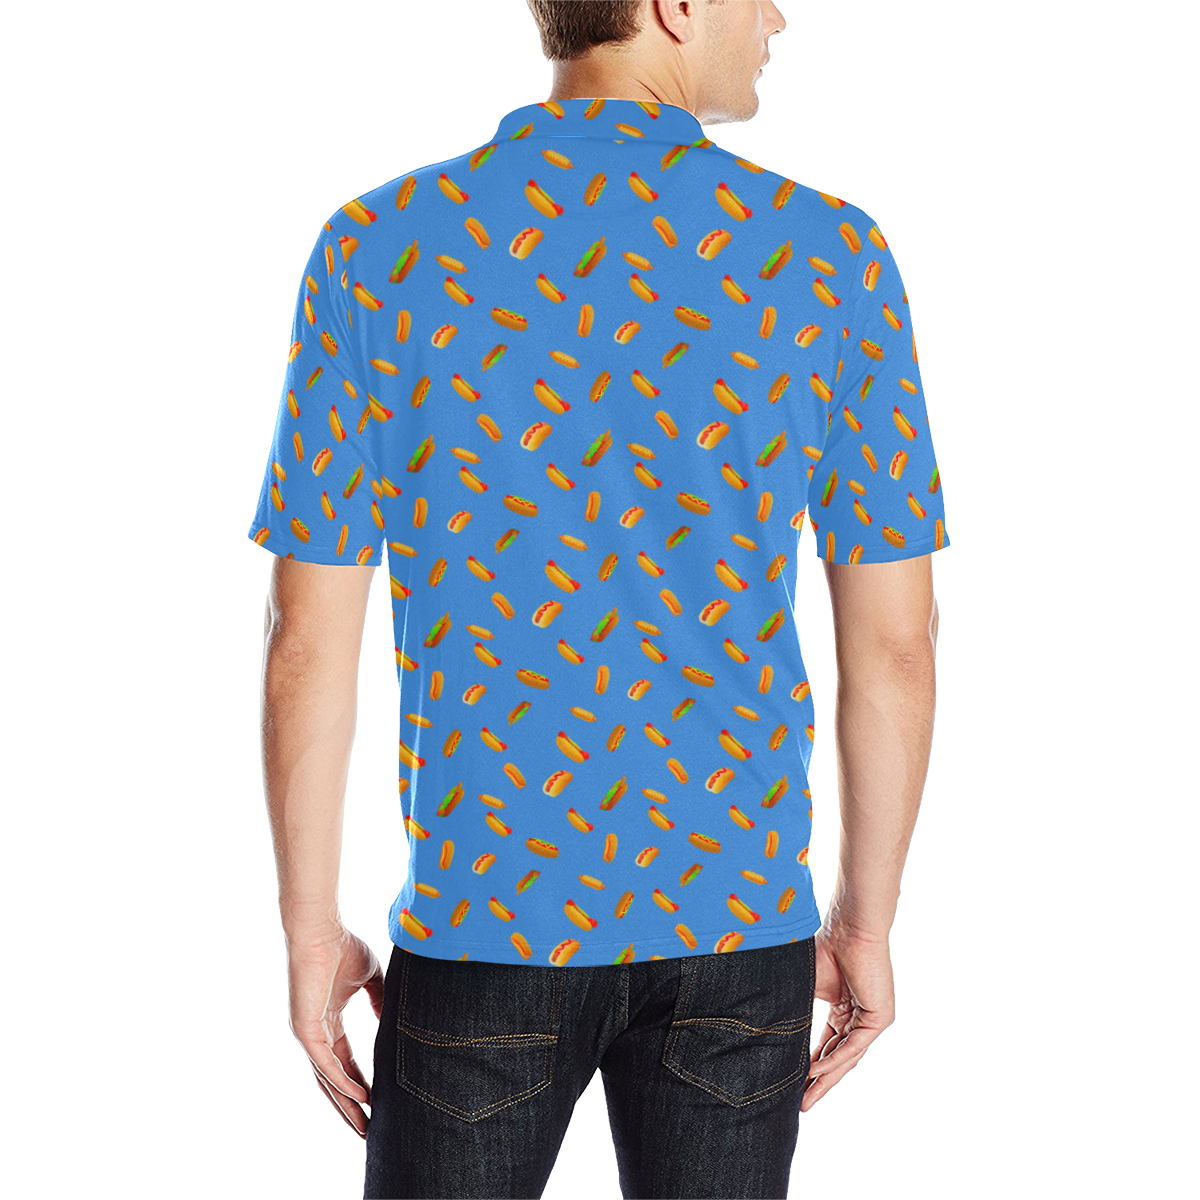 Hot Dog Pattern Men's All Over Print Polo Shirt (Model T55)